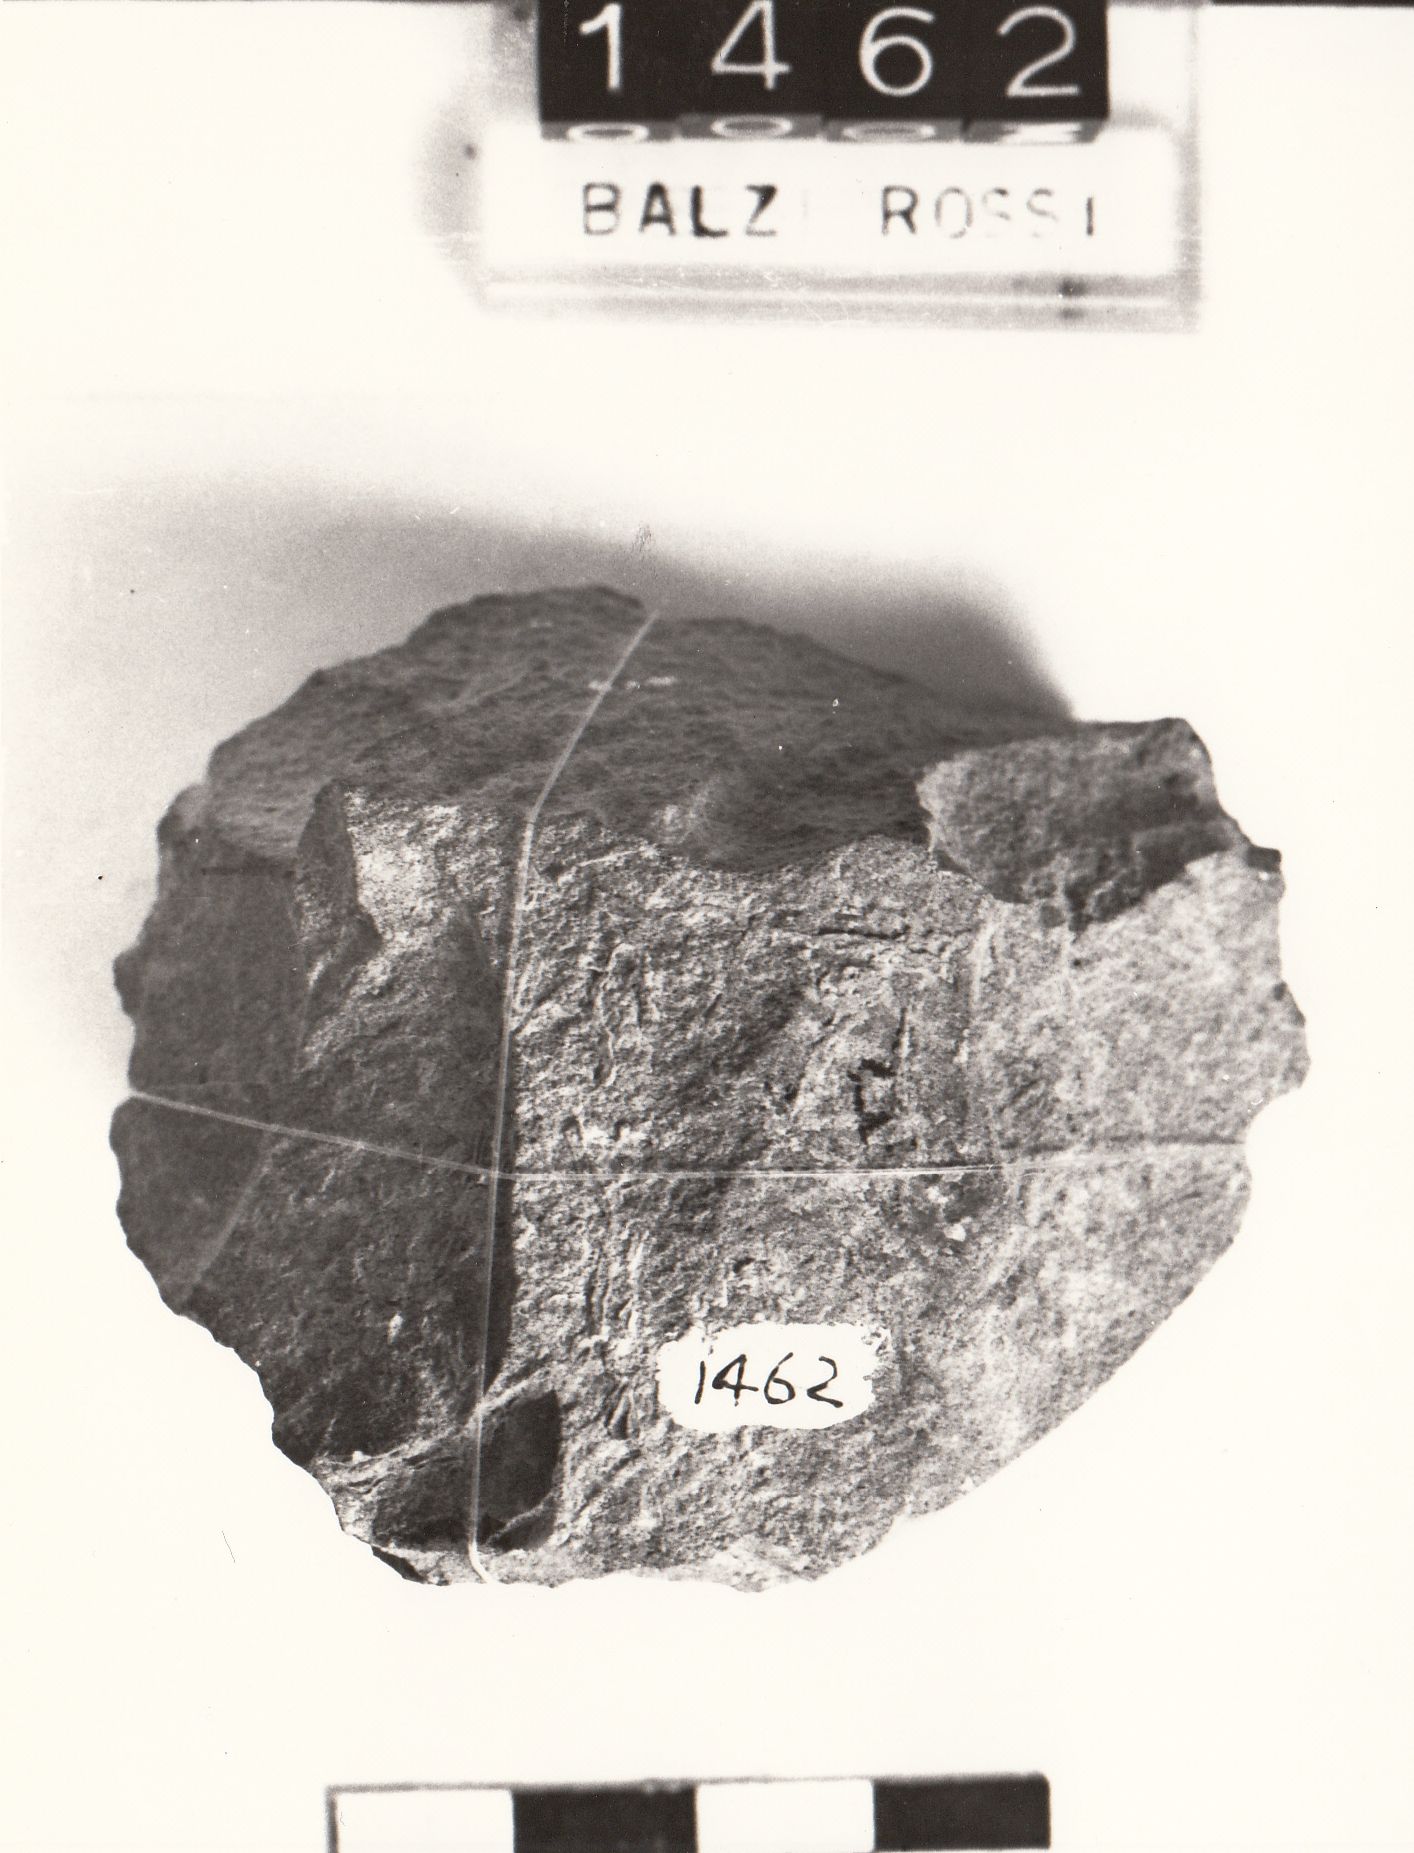 pebble-tool, discoidale (Paleolitico medio)